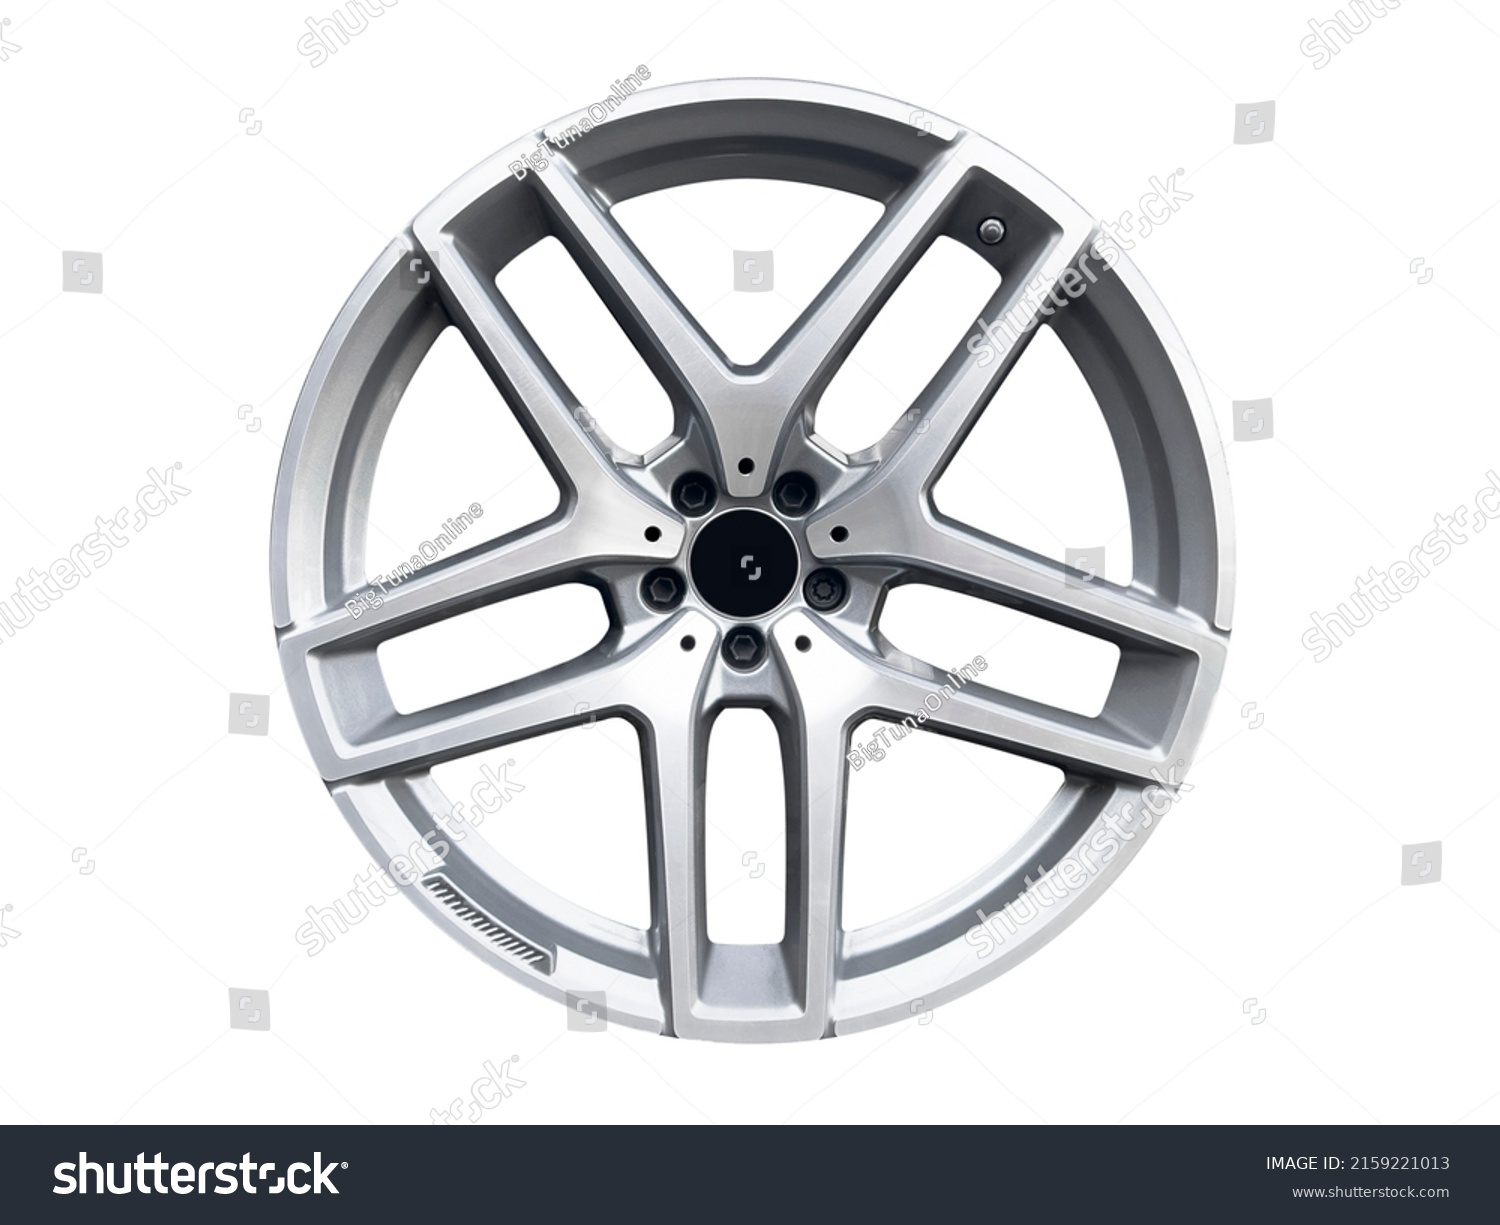 Car alloy wheel isolated on white background. New alloy wheel for a car on a white background. Alloy rim isolated. Car wheel disc. #2159221013